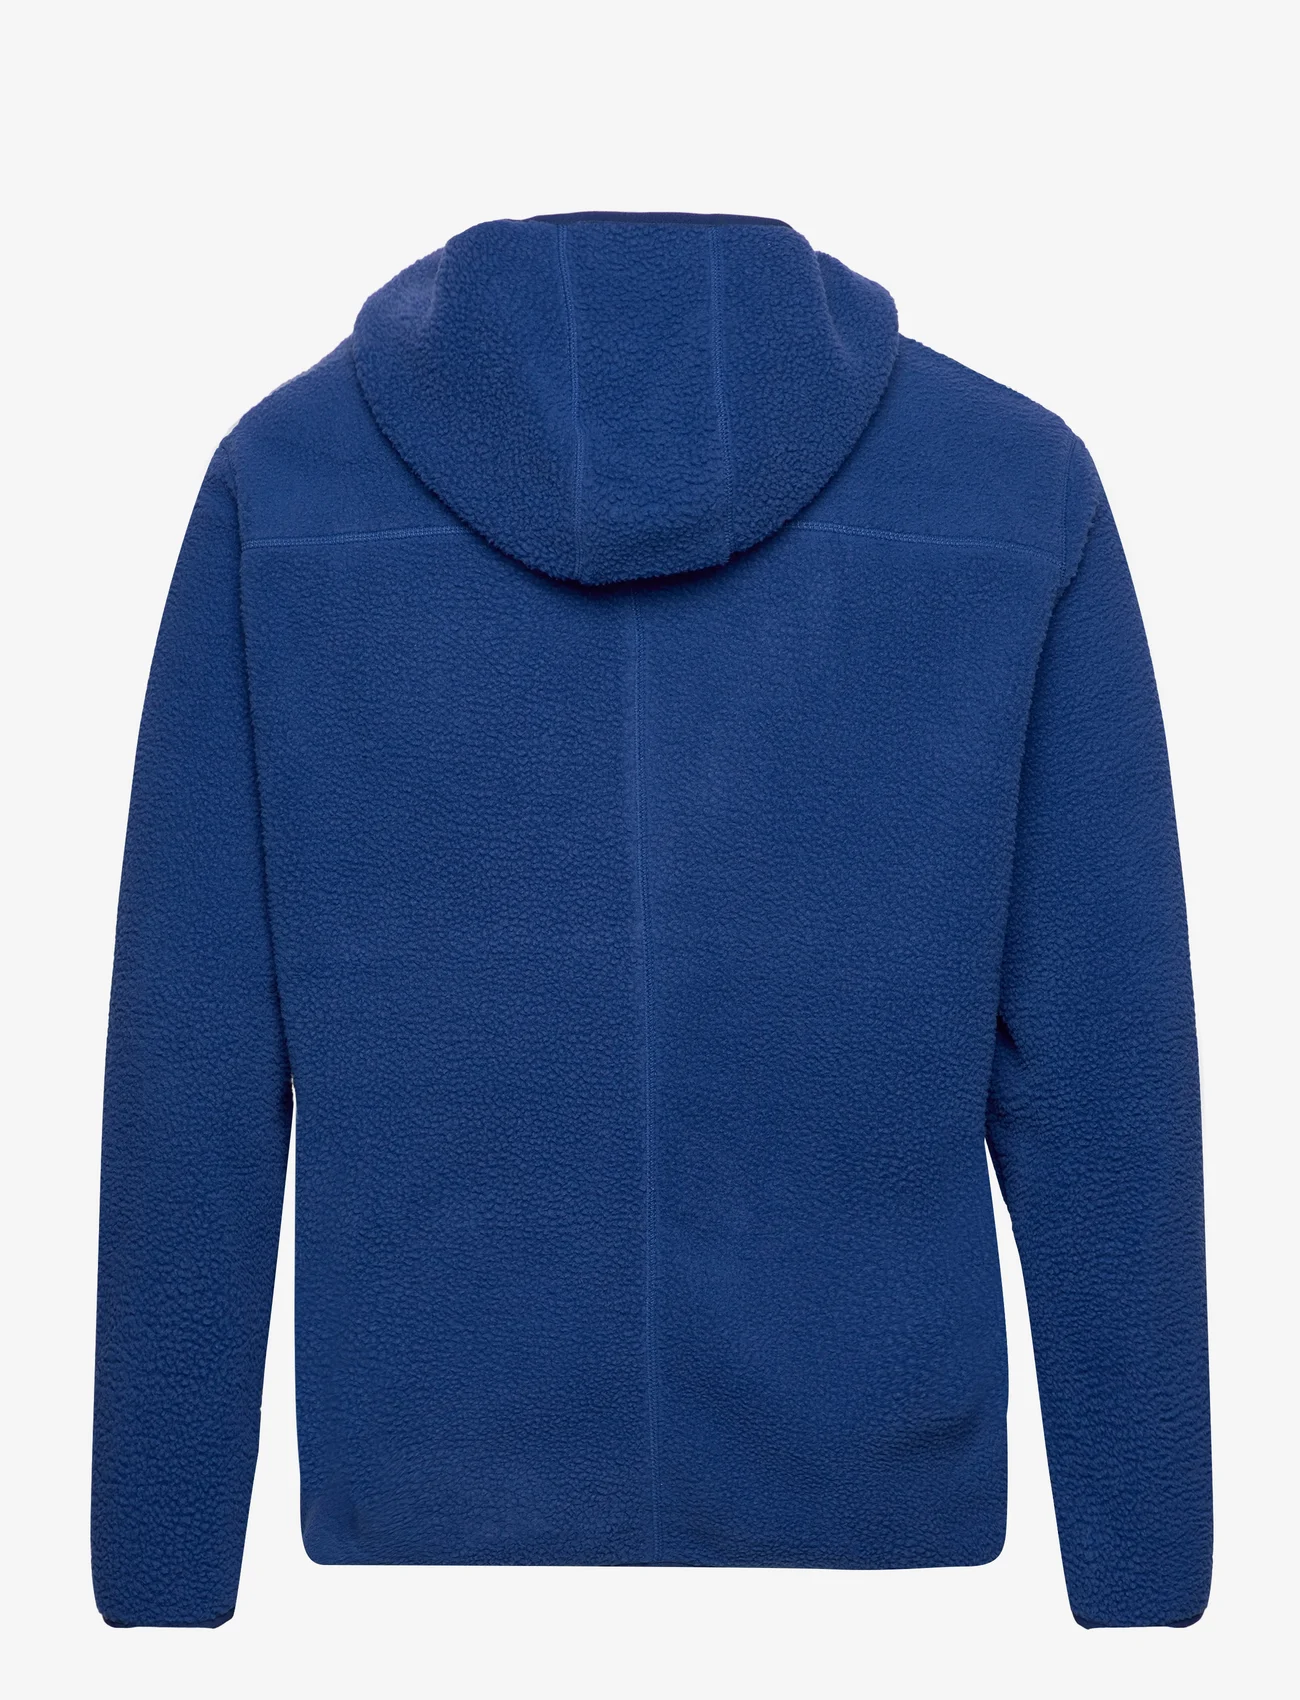 Matinique - MAvinson 73 - mid layer jackets - wave blue - 1